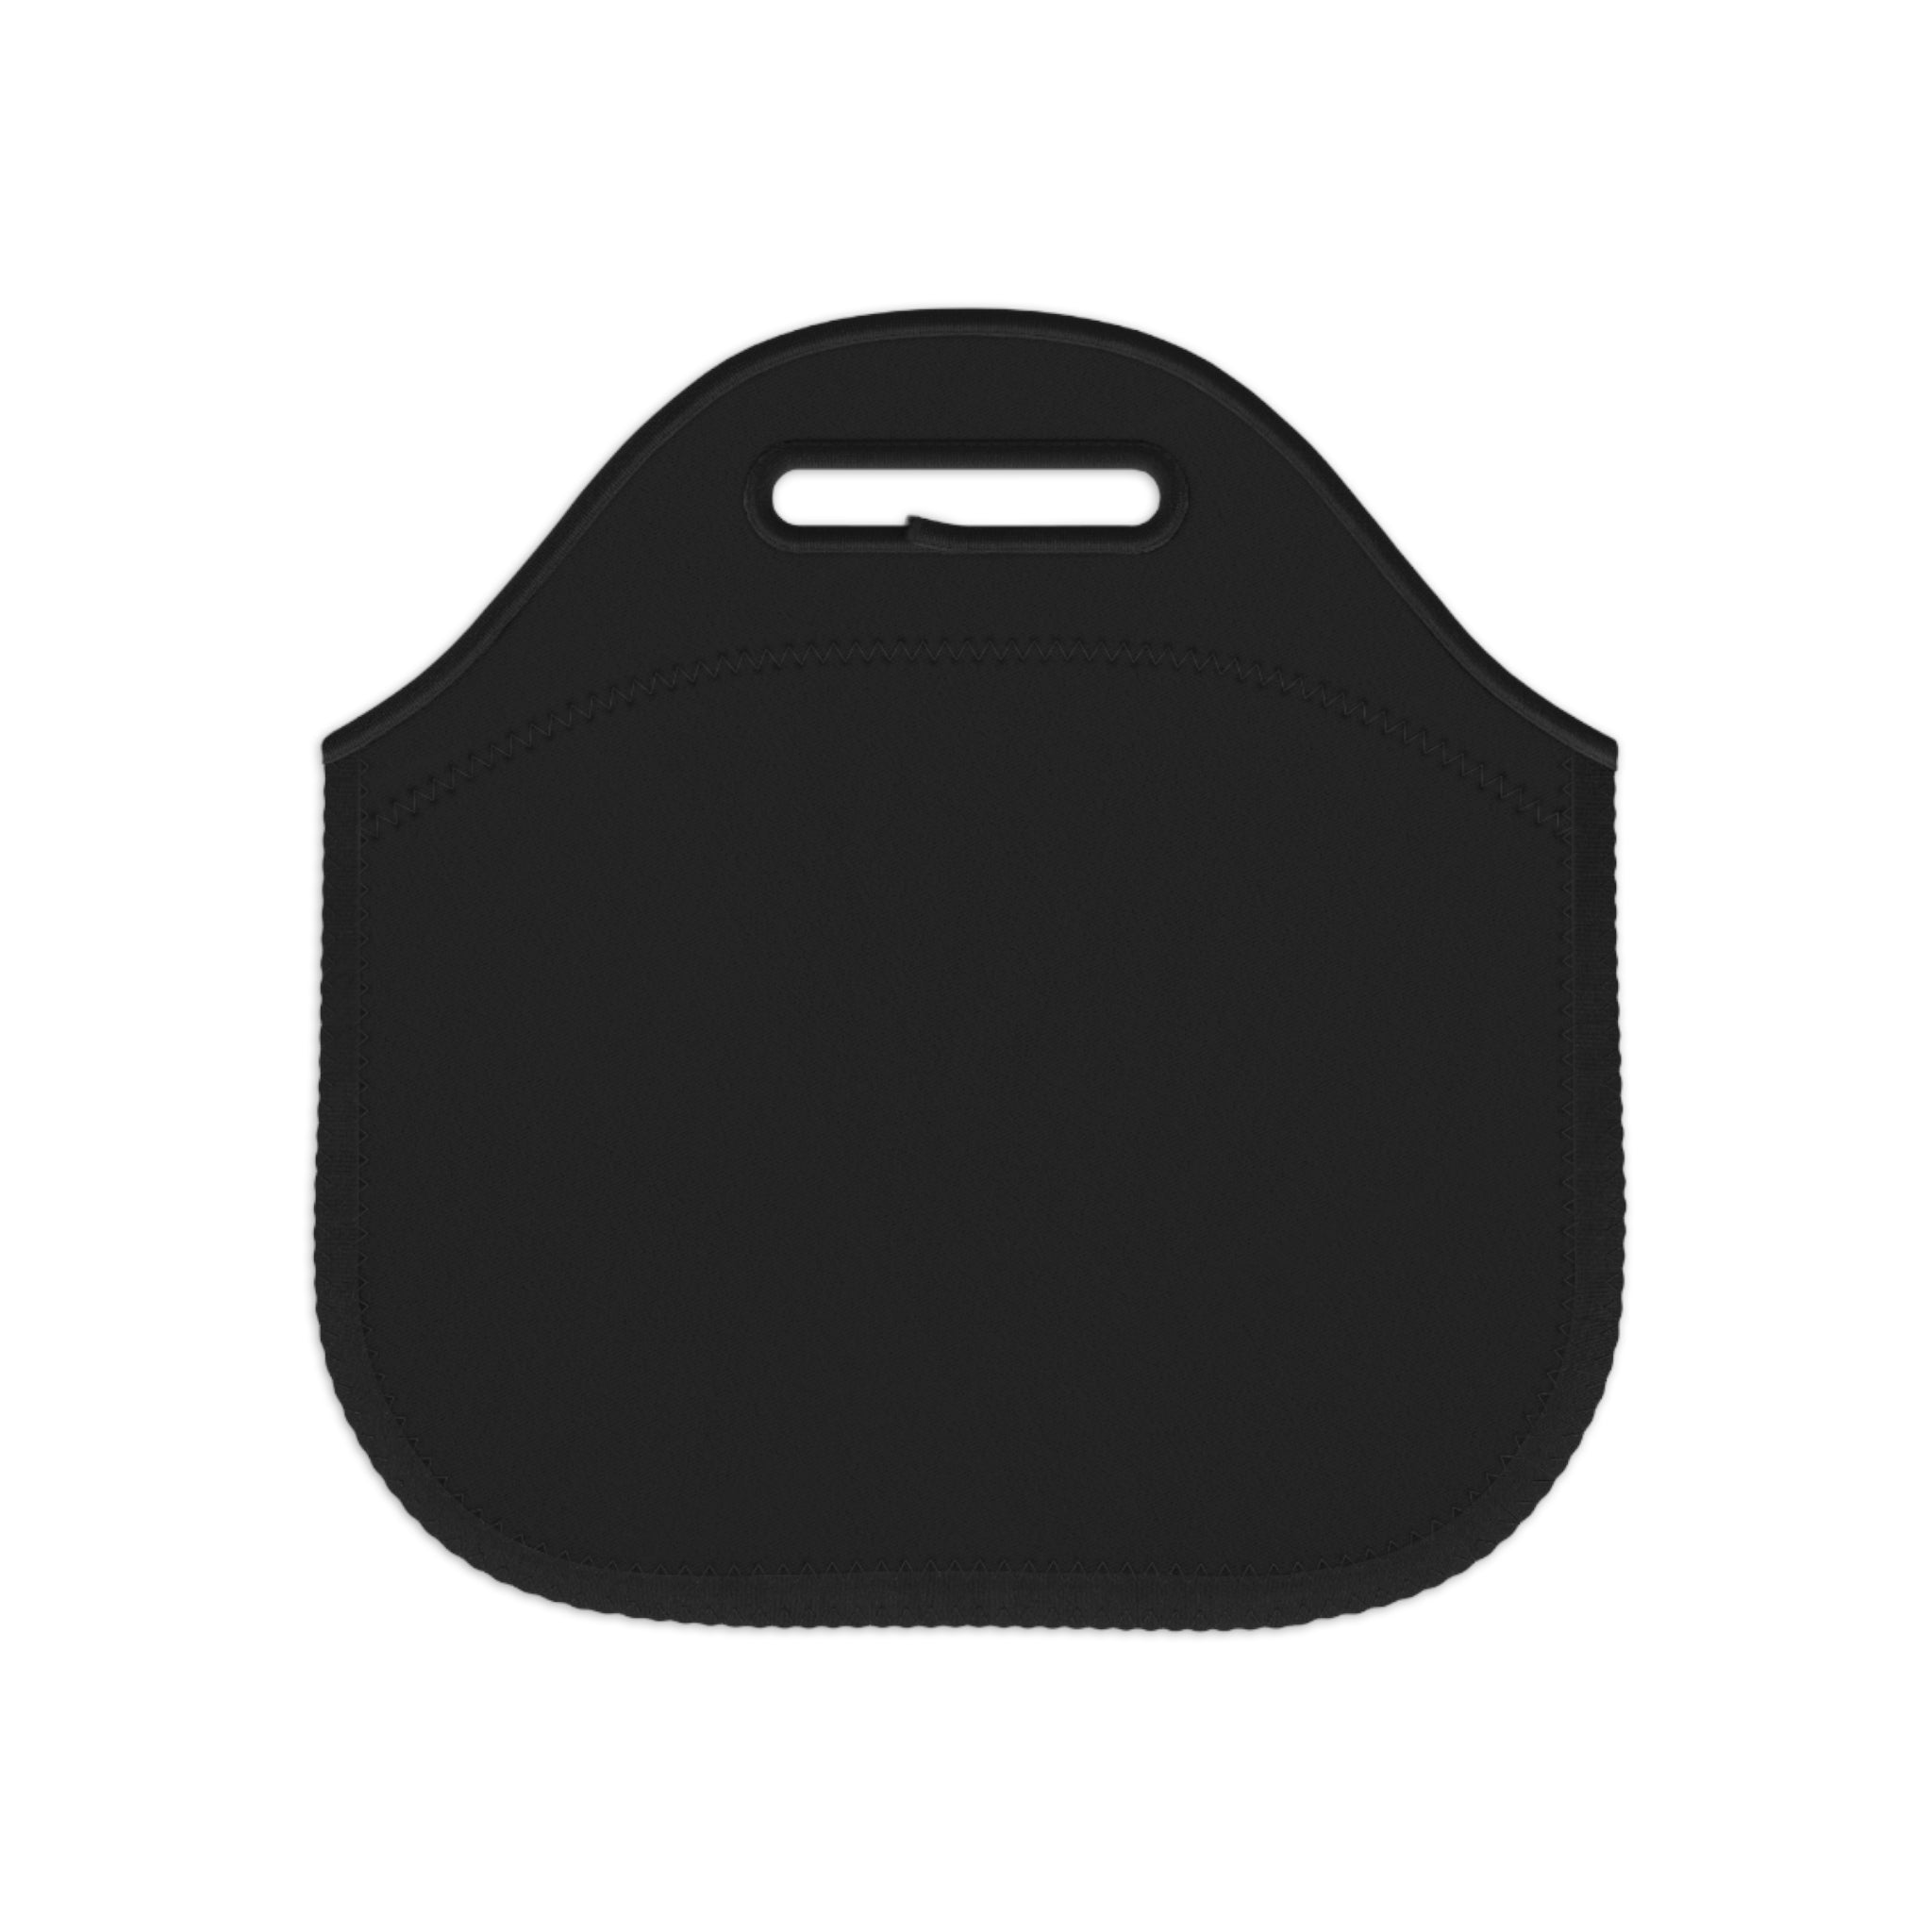 Atomic Cat, Mid Mod Geometric Cool, Kitsch Adult Retro Neoprene Lunch Bag Bags